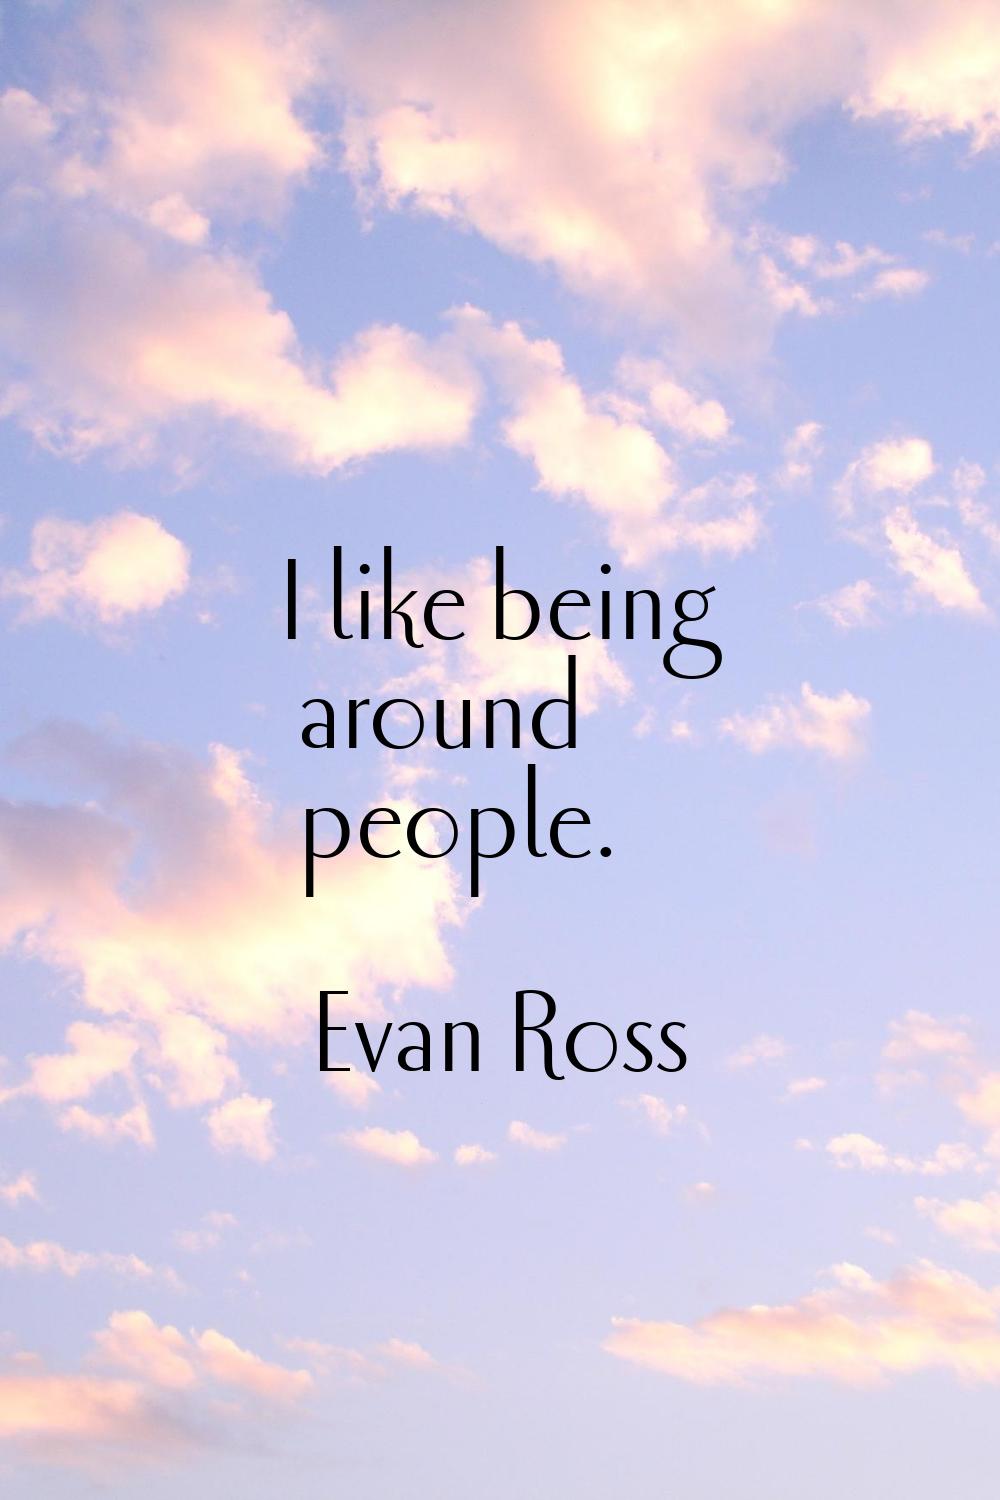 I like being around people.